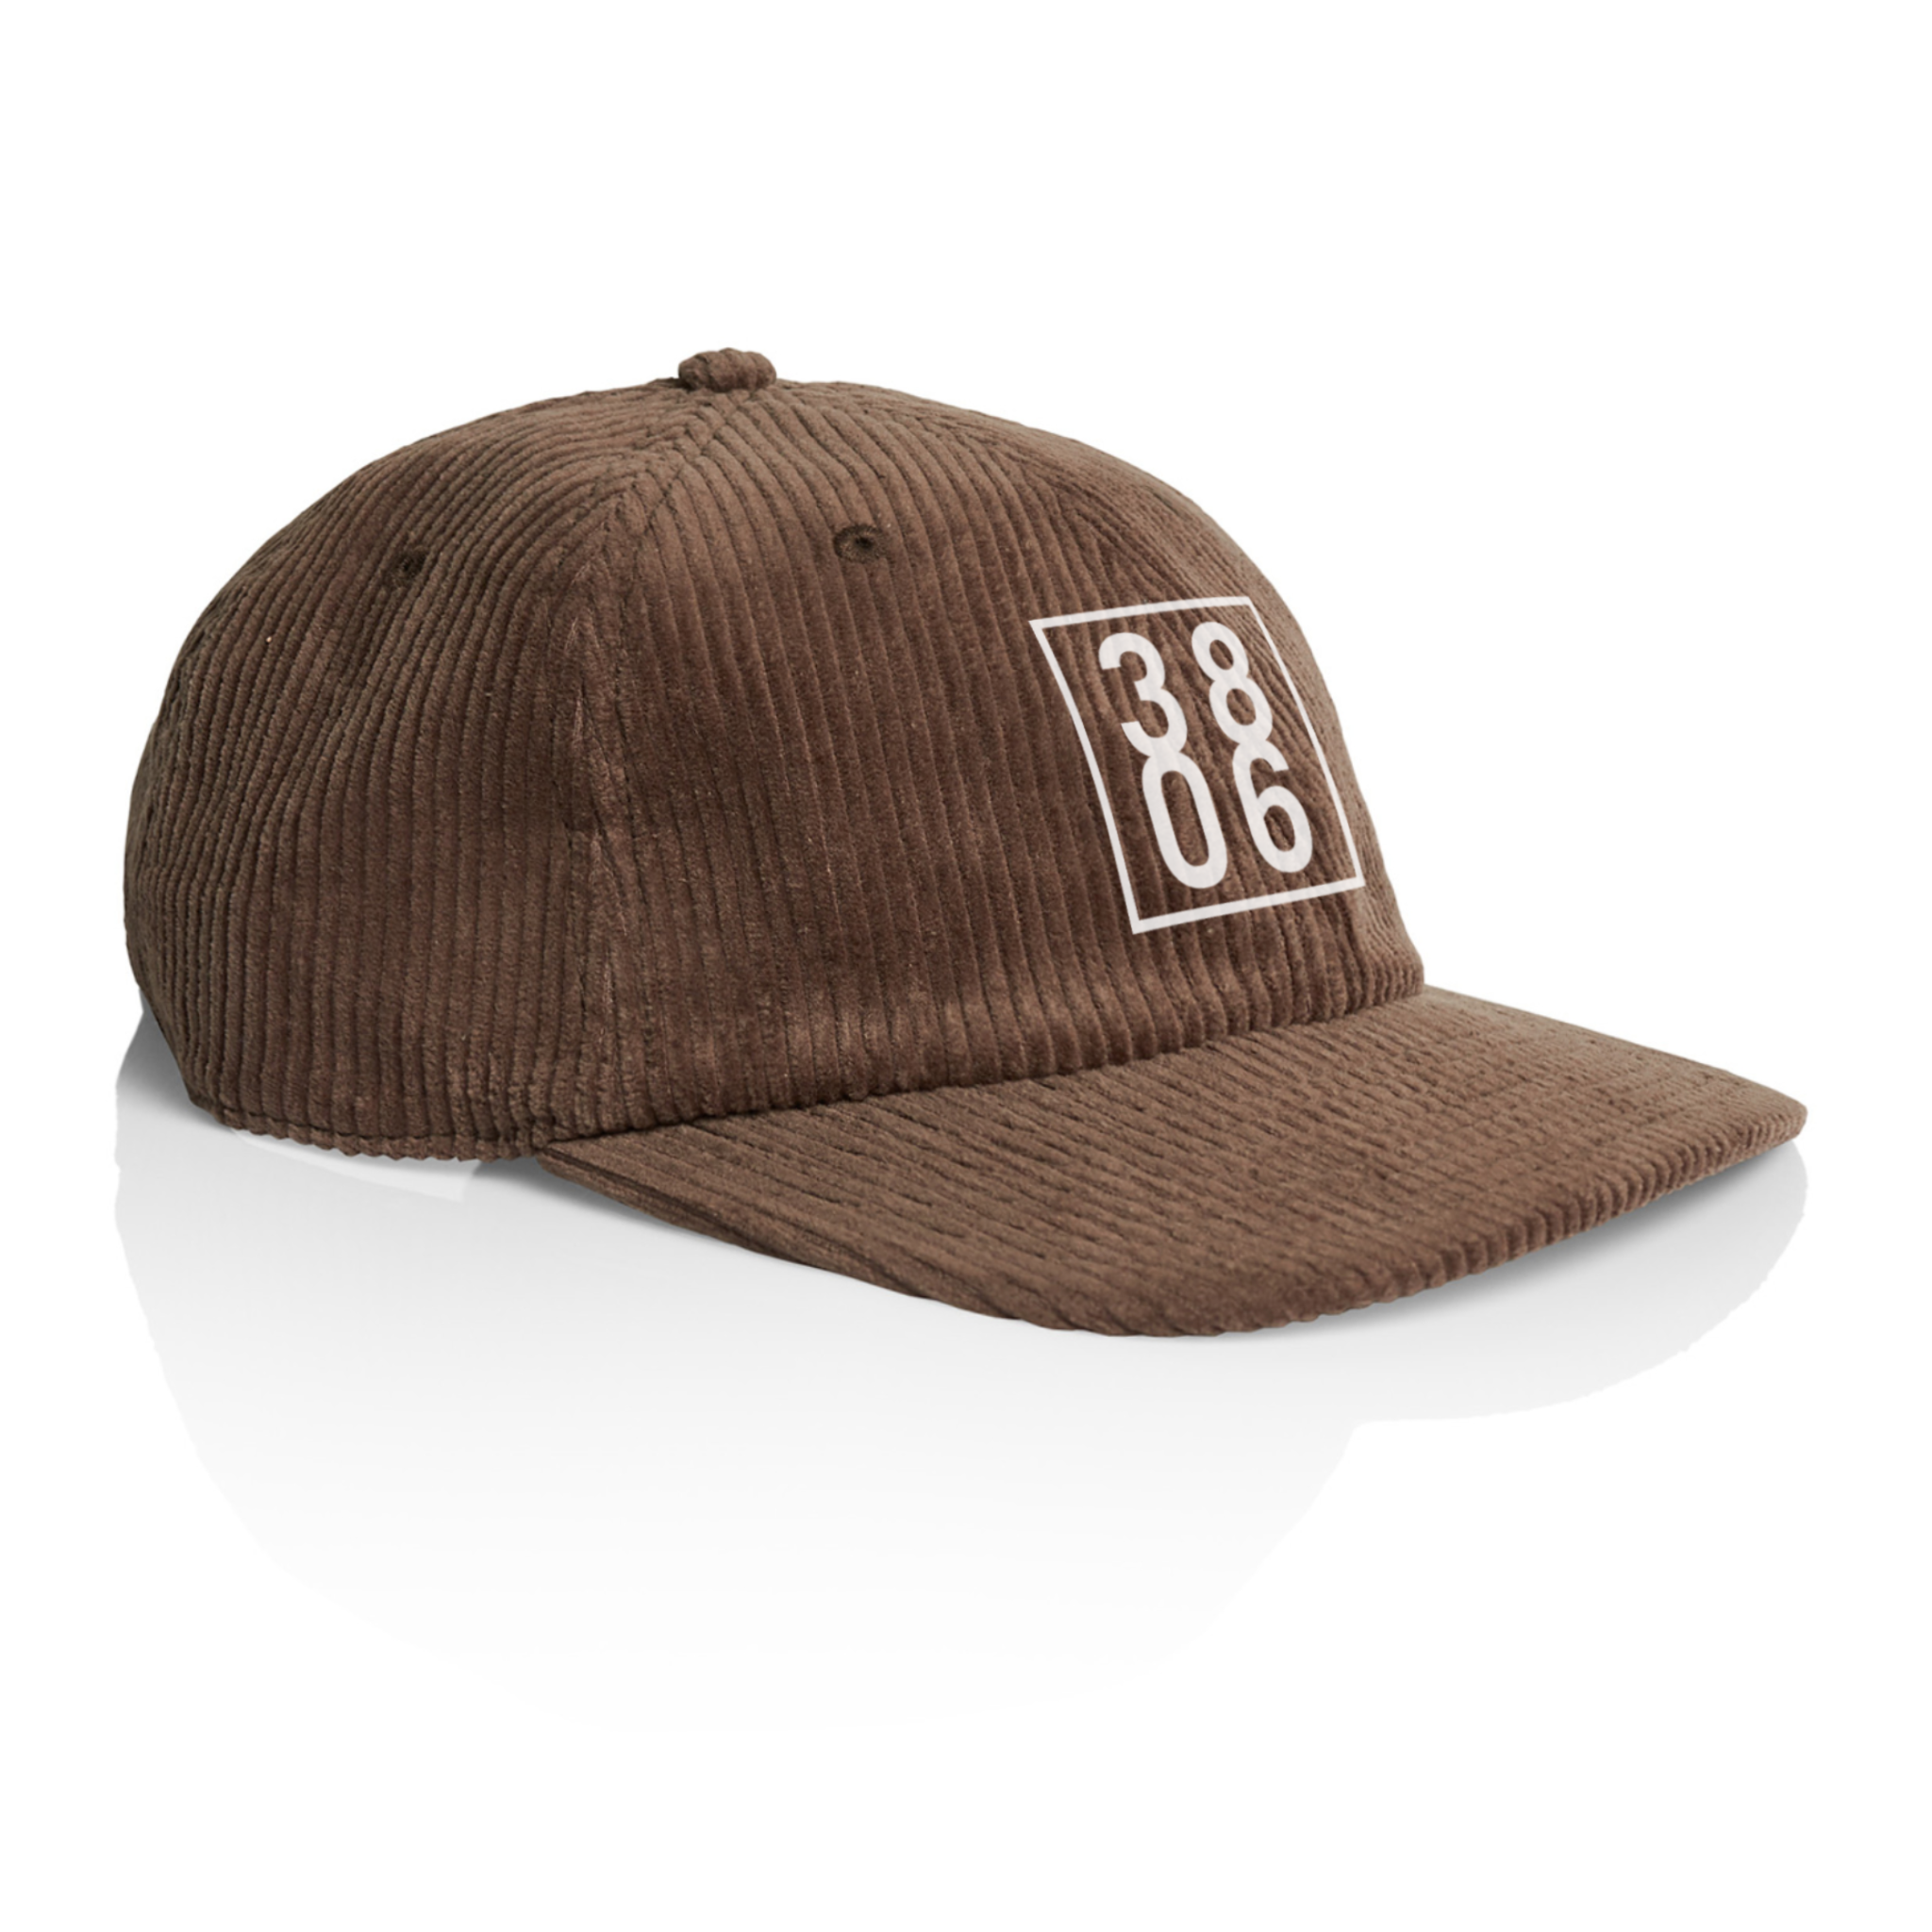 3806 Cord Hat